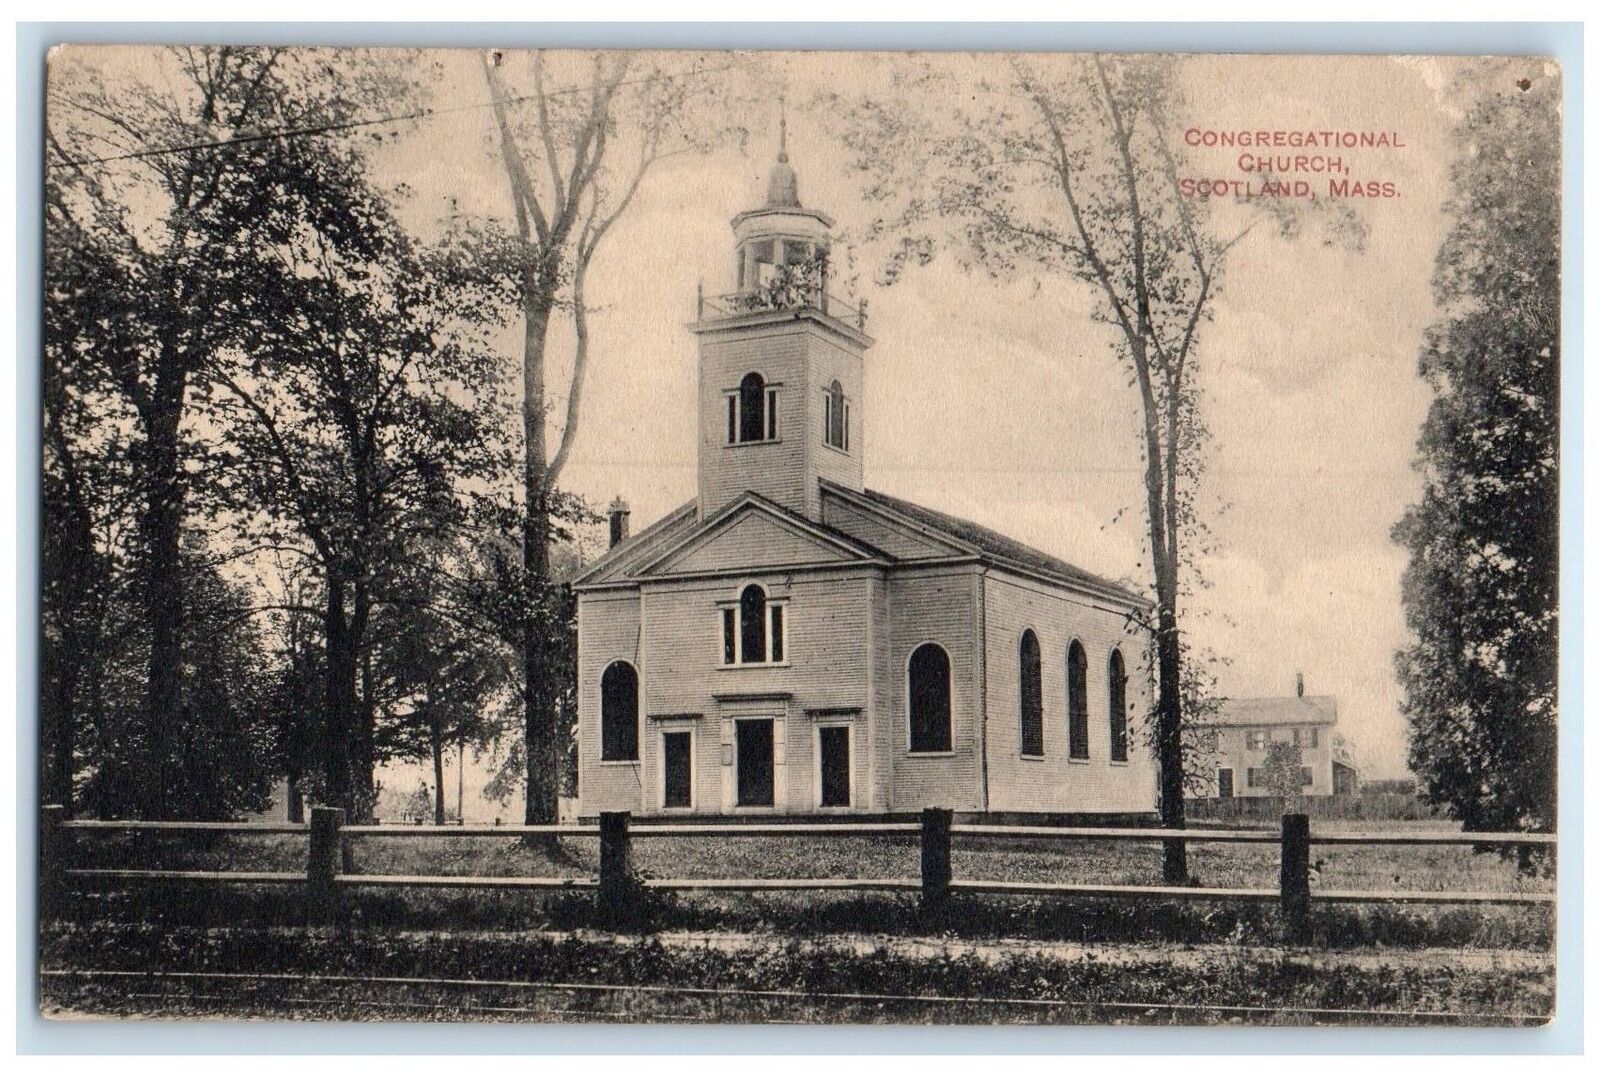 c1910 Congregational Church Building Tower Scotland Massachusetts MA Postcard